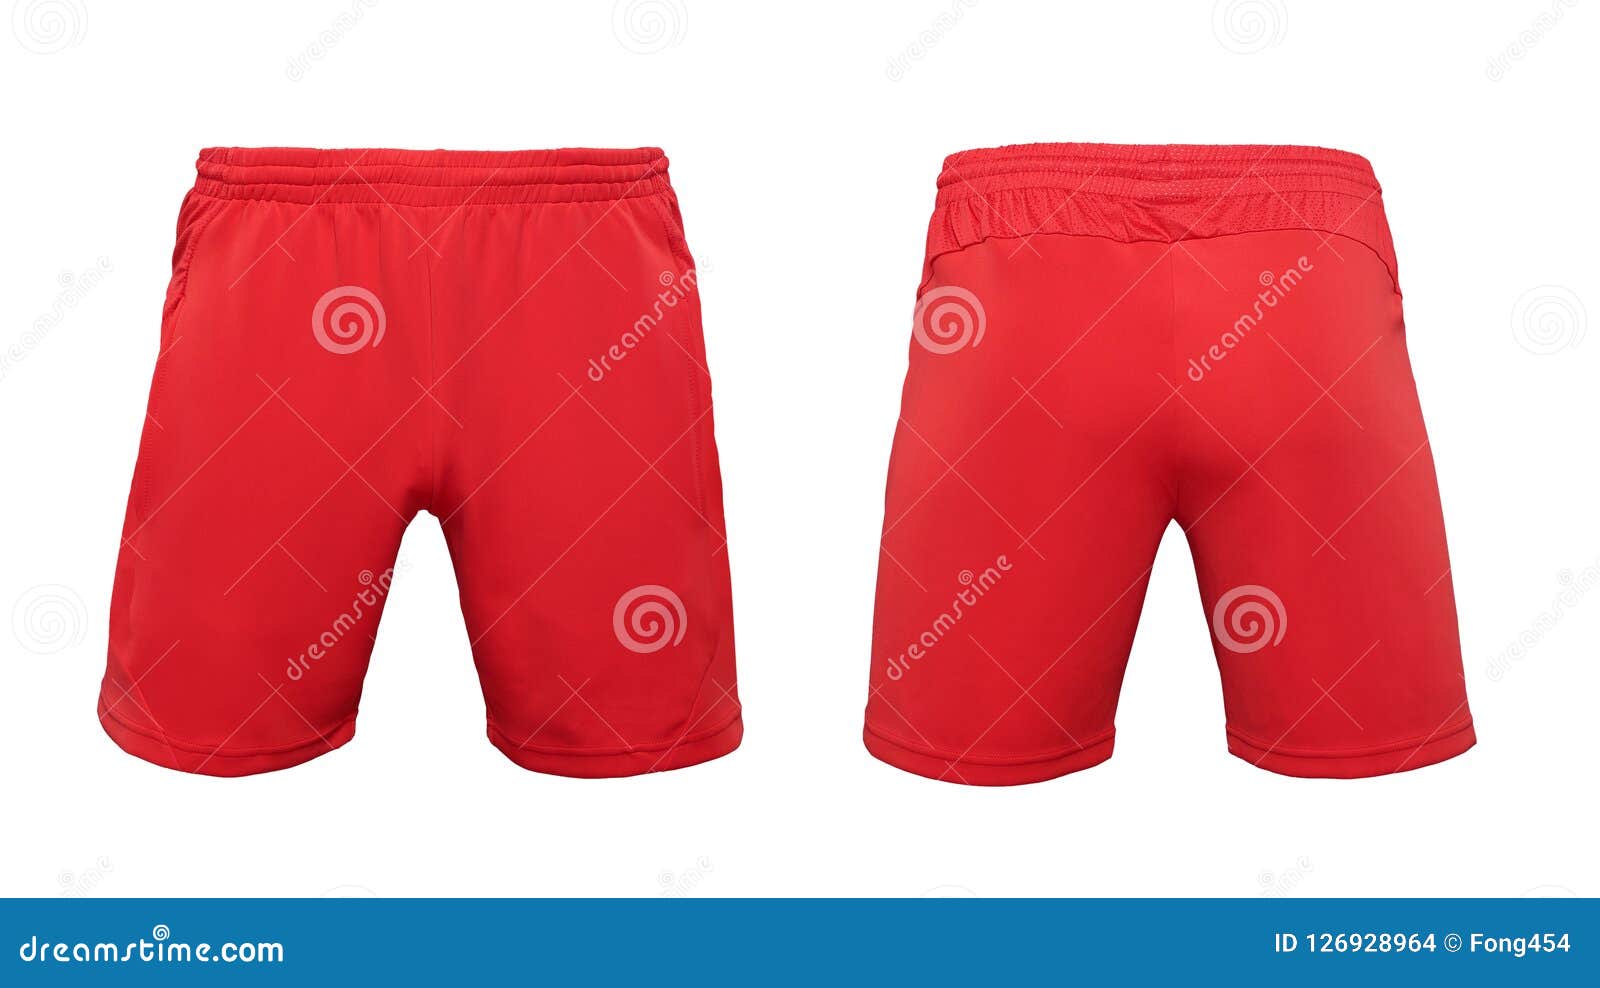 Boxer Short Red Pants Isolated on White Background Stock Photo - Image ...